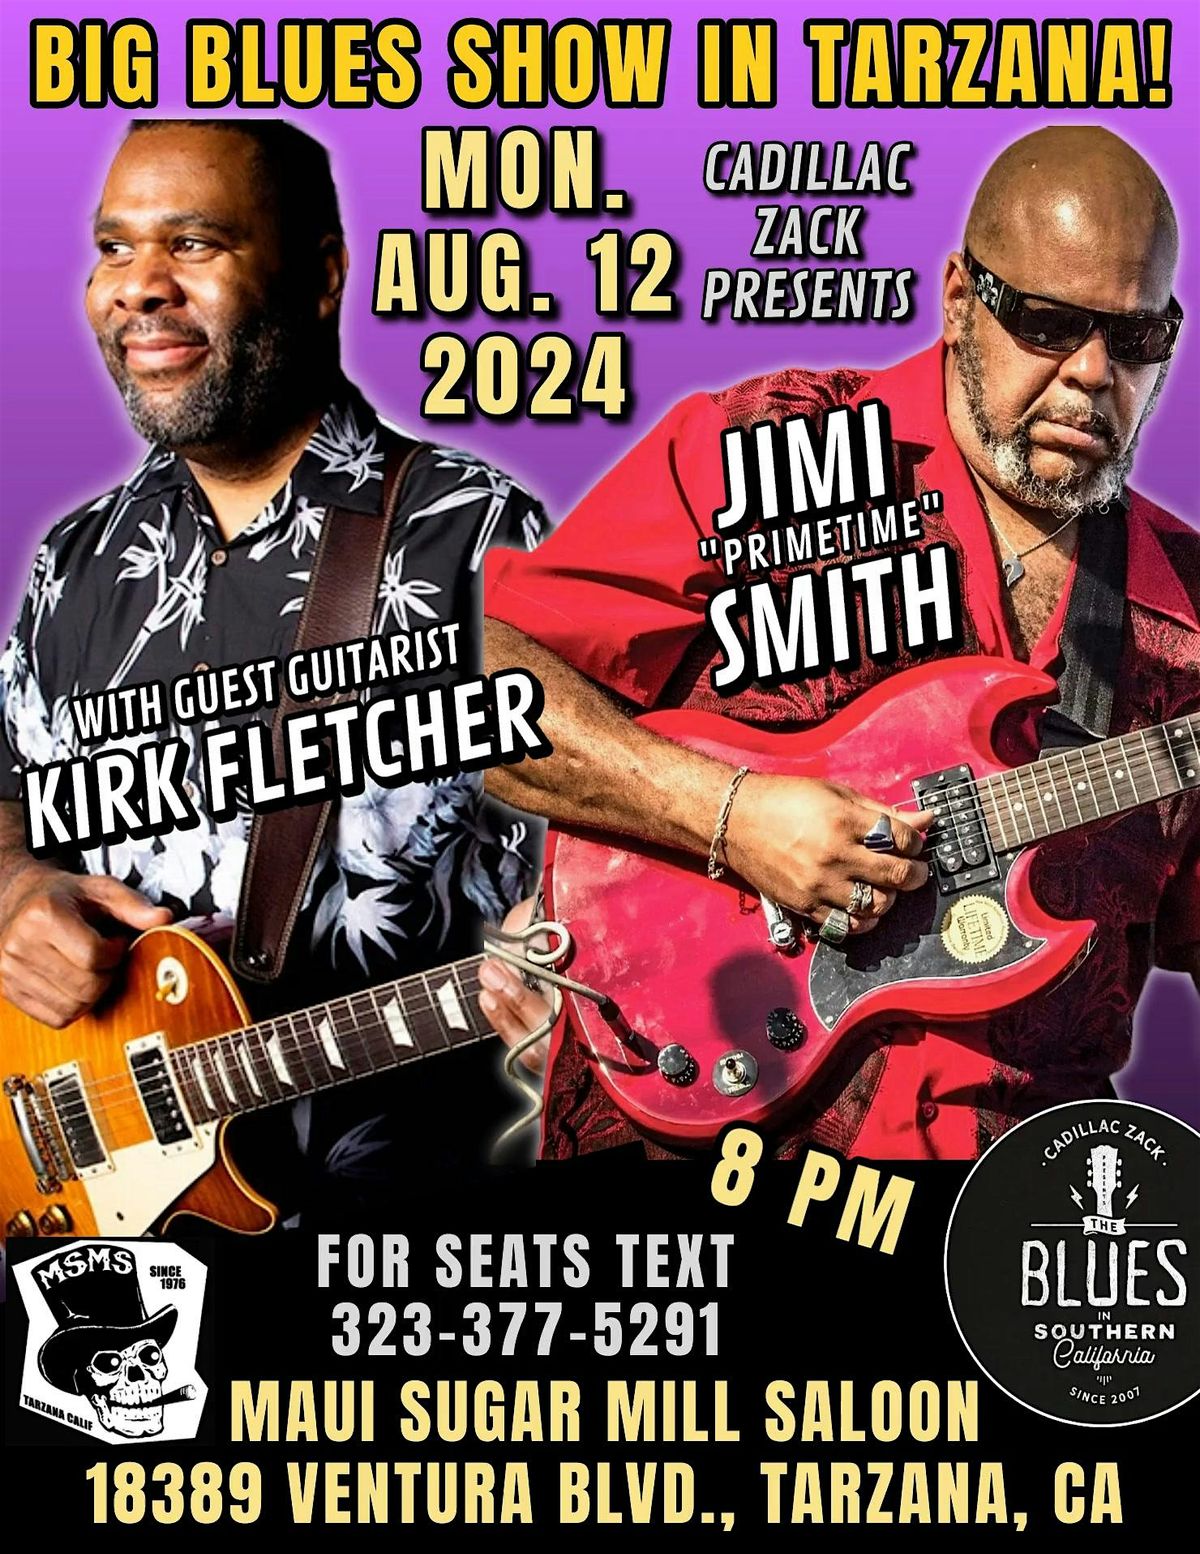 JIMI "PRIMETIME" SMITH & KIRK FLETCHER - Blues Guitar Greats - in Tarzana!